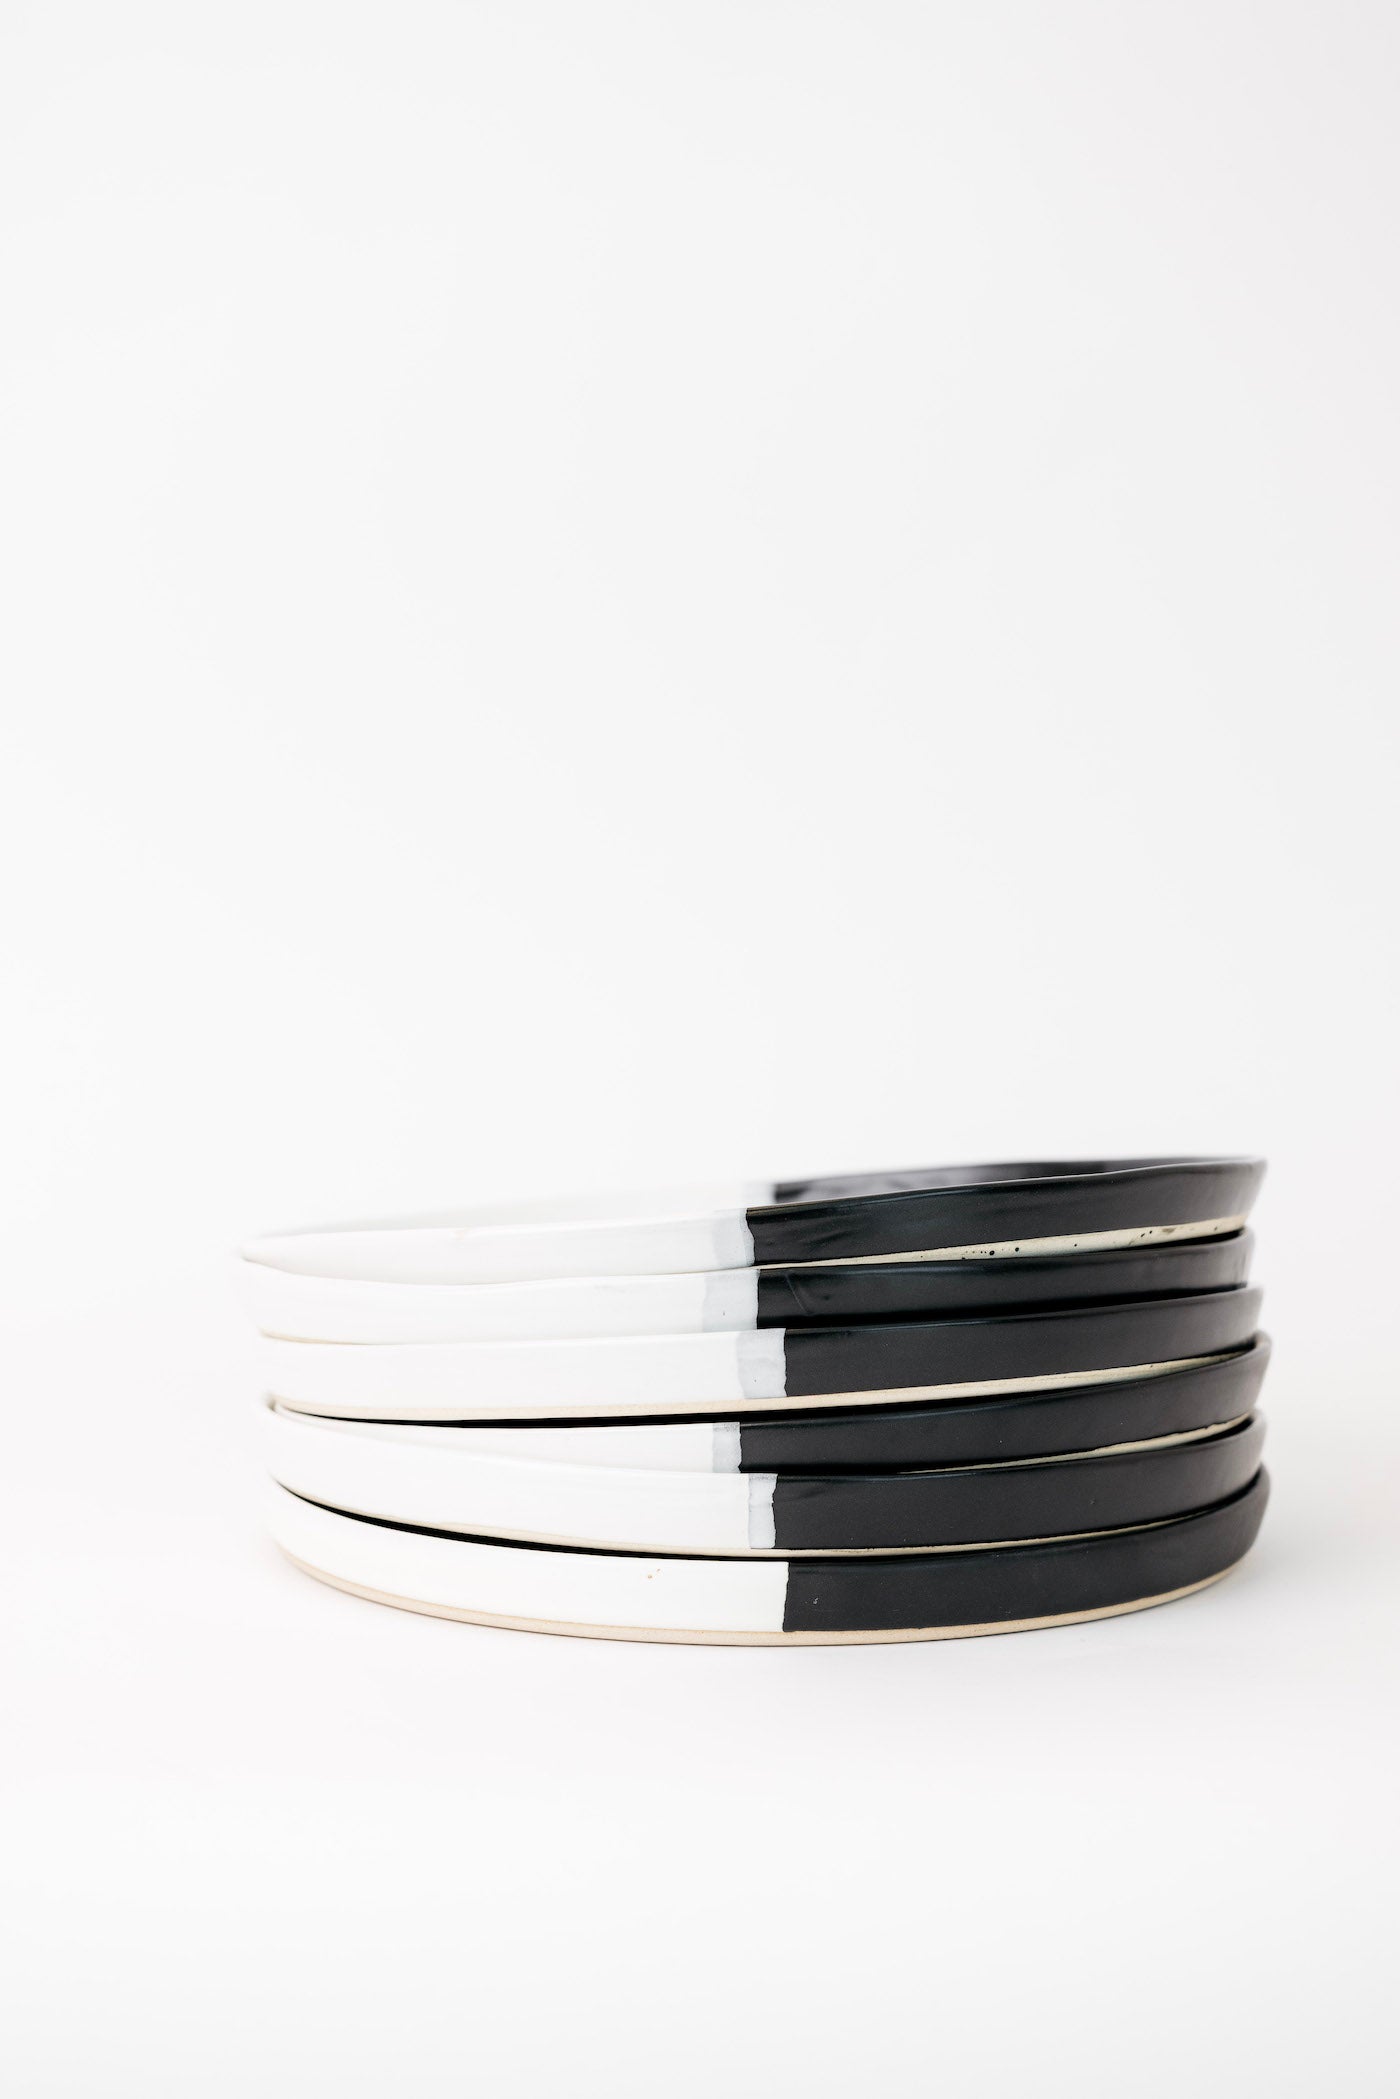 Dawson Dinner Plate - Matte Black/White - Set of 6